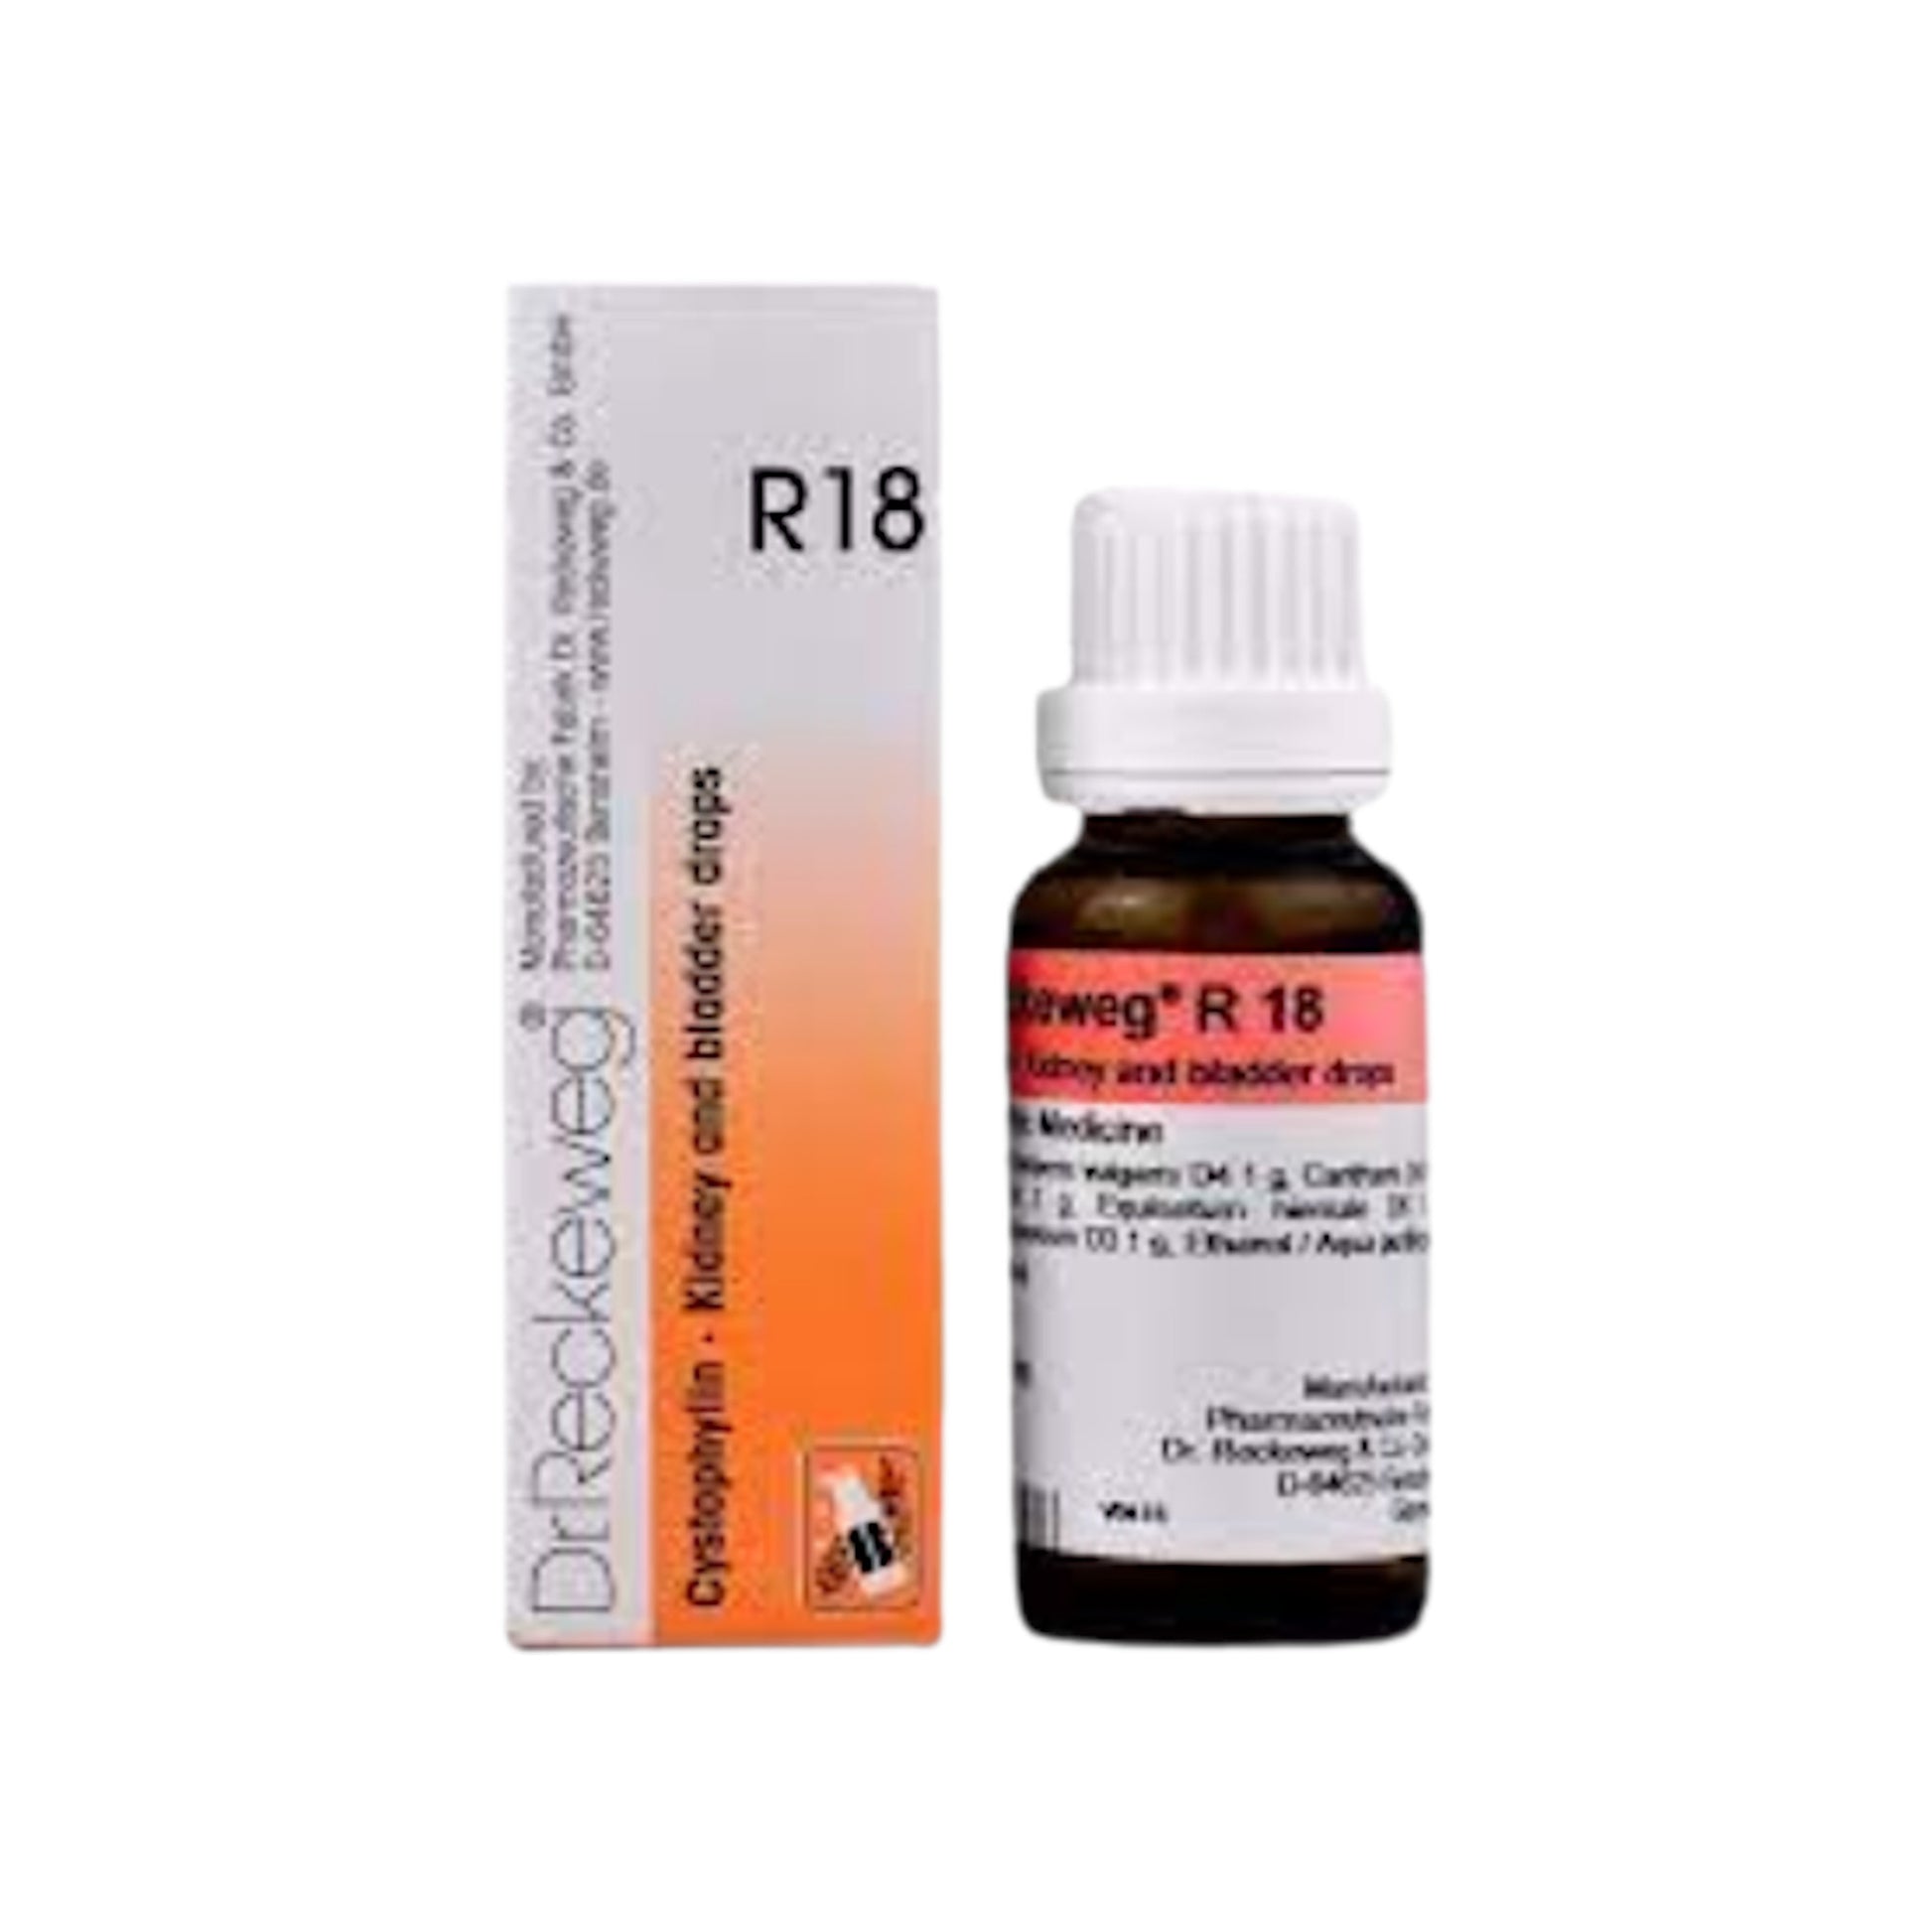 Image for DR. RECKEWEG R18 - Kidney and Bladder Drops: Homeopathic remedy for kidney and bladder issues.